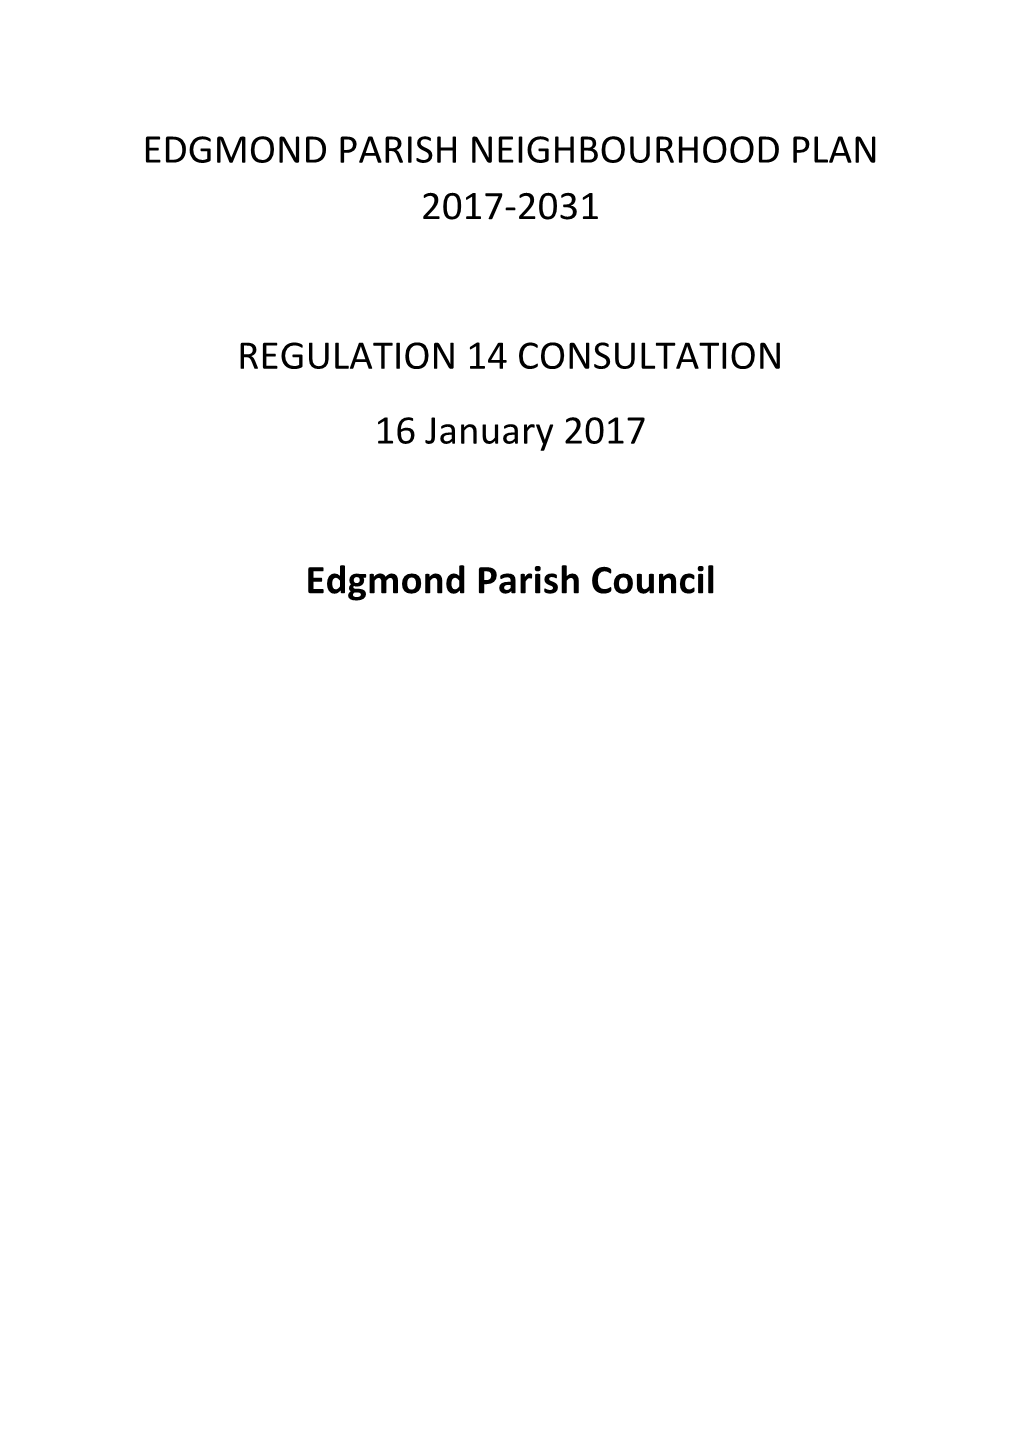 Edgmond Draft Neighbourhood Plan